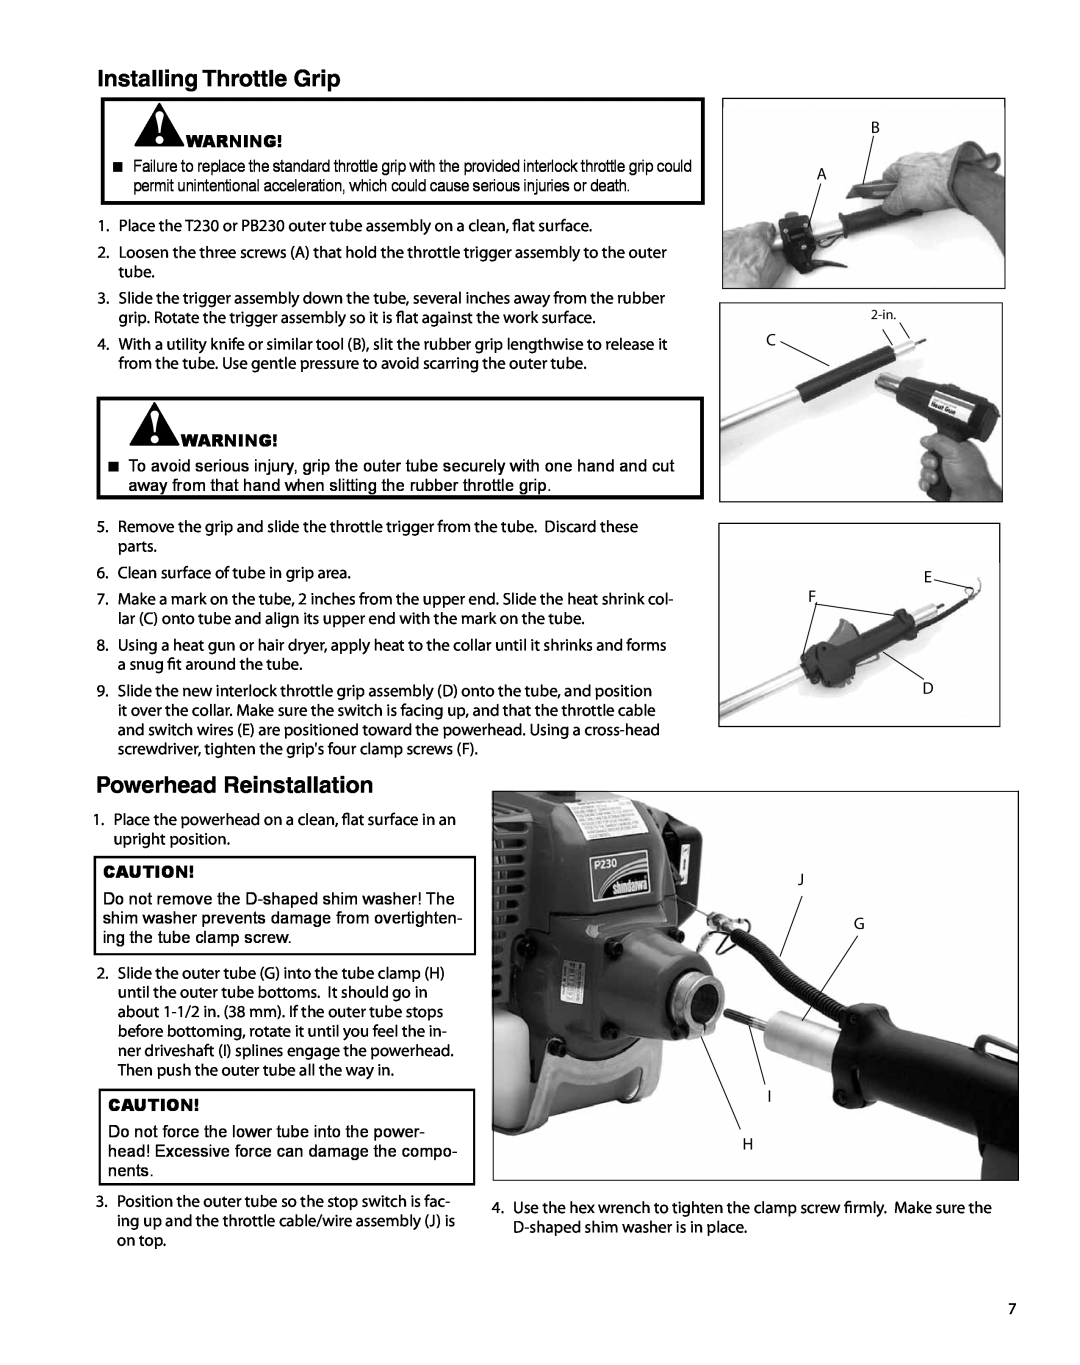 Shindaiwa T230 manual Installing Throttle Grip, Powerhead Reinstallation 